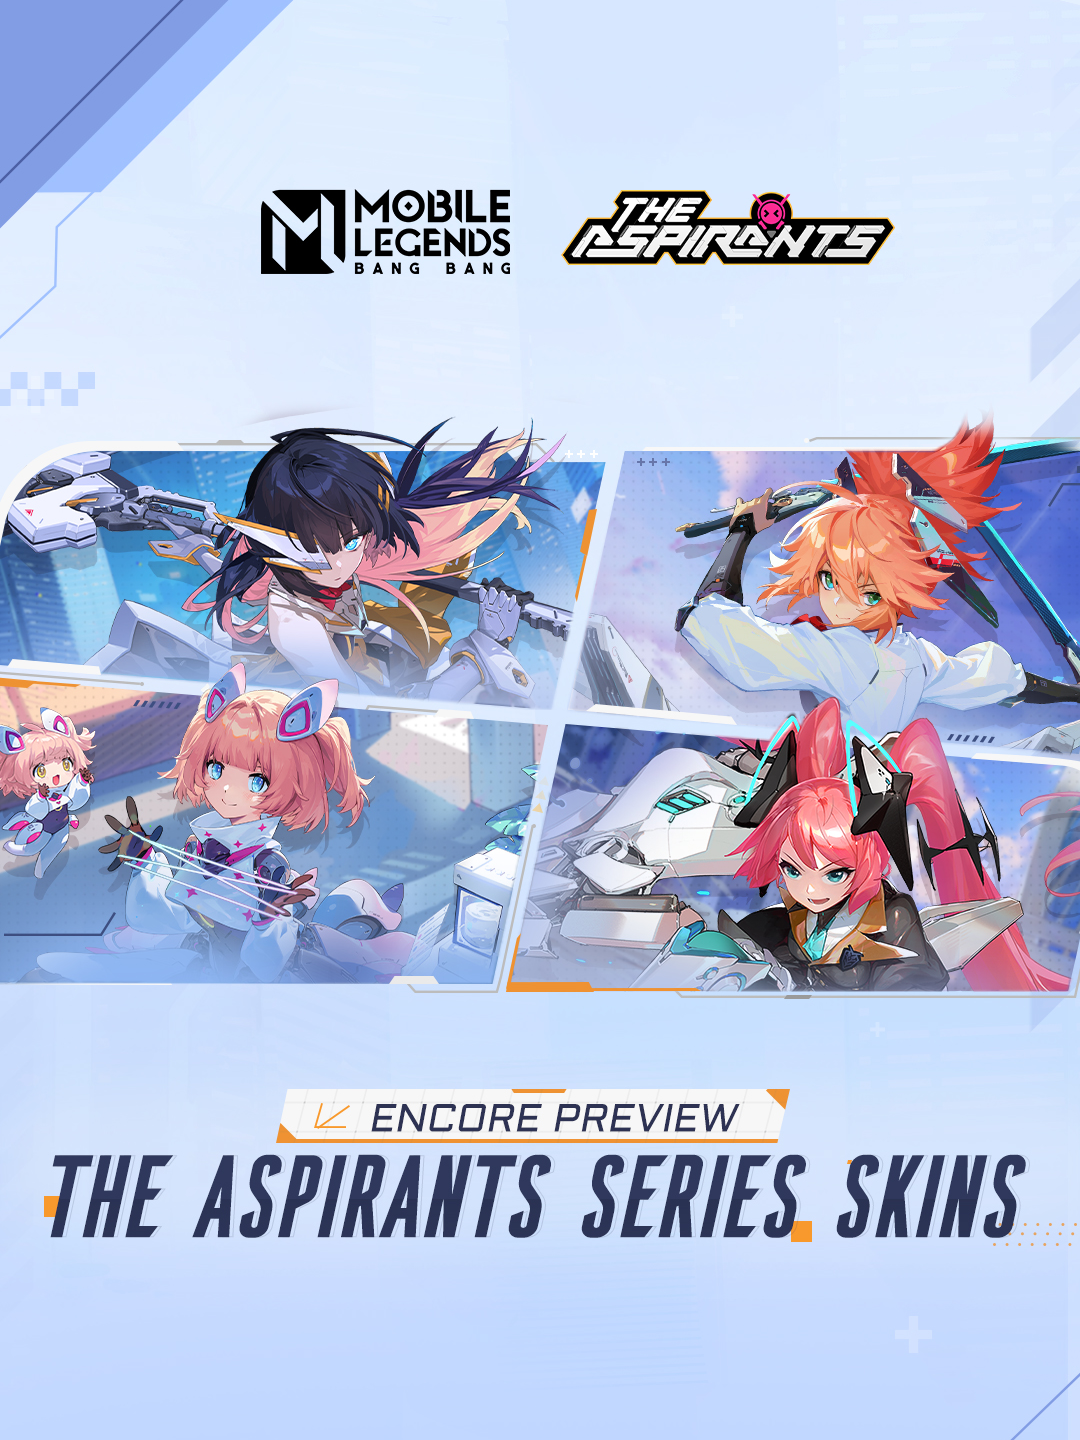 Aspirants Unite, reignited once again! The Aspirants Series Skins - Layla 